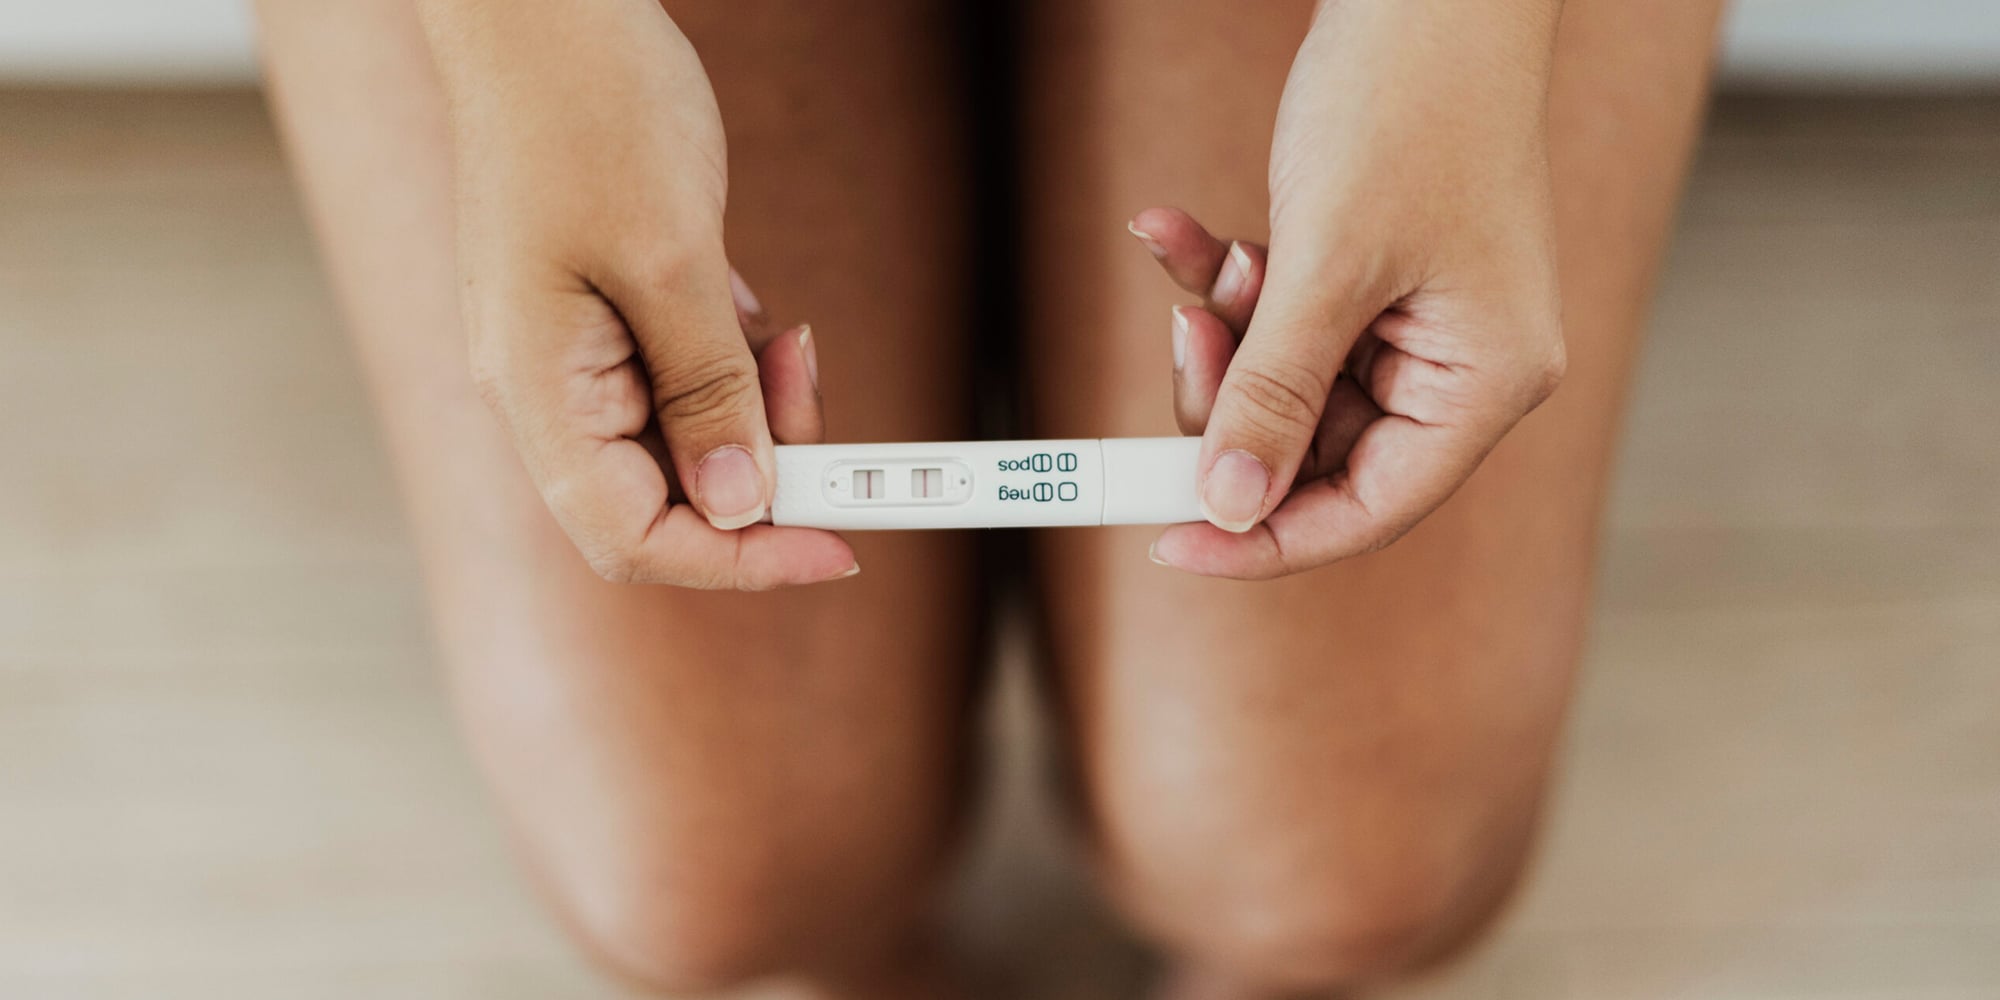 Sintomas de gravidez mais comuns entre as mulheres - Brasil Escola